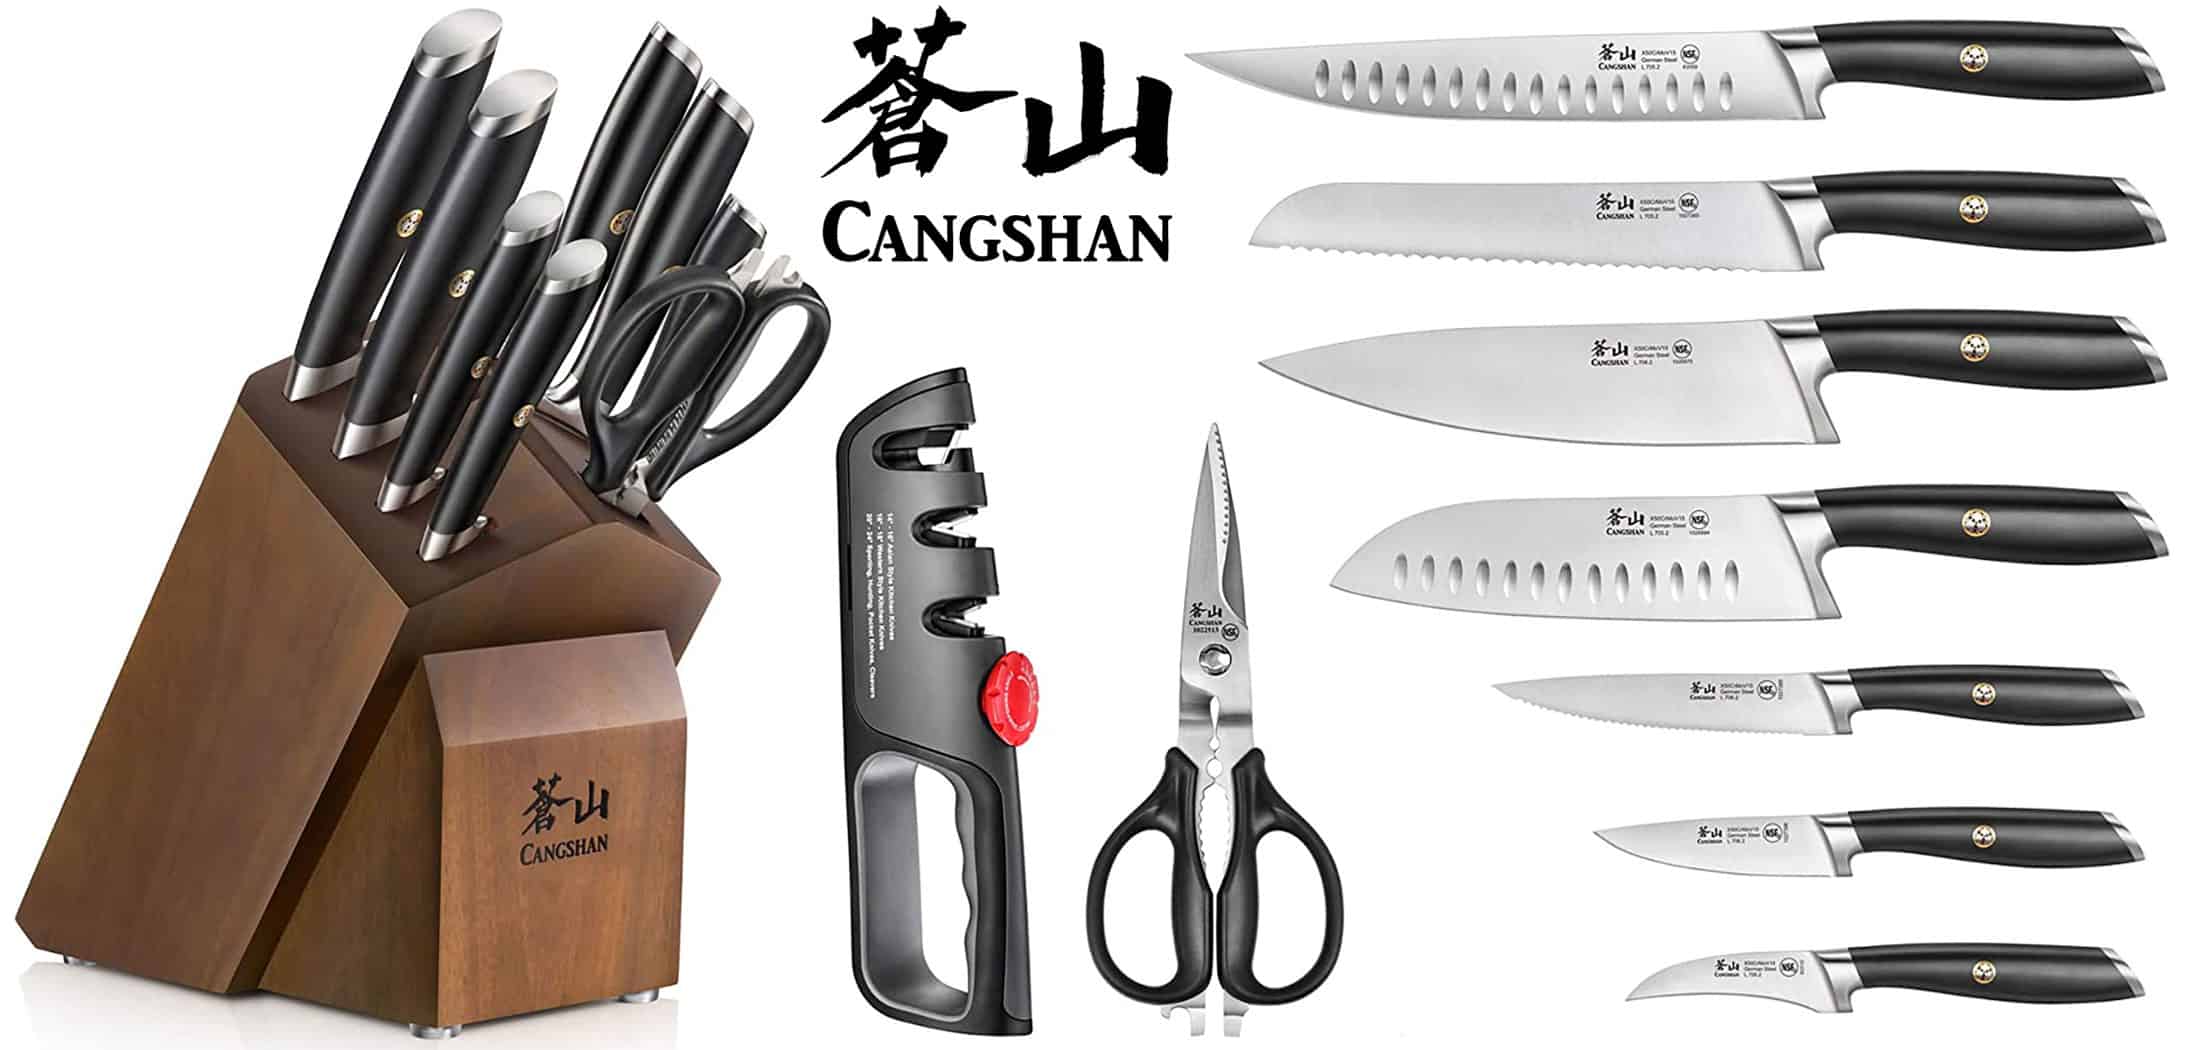 https://www.nothingbutknives.com/wp-content/uploads/2022/11/Cangshan-L1-Series-10-piece-Knife-Set.jpg